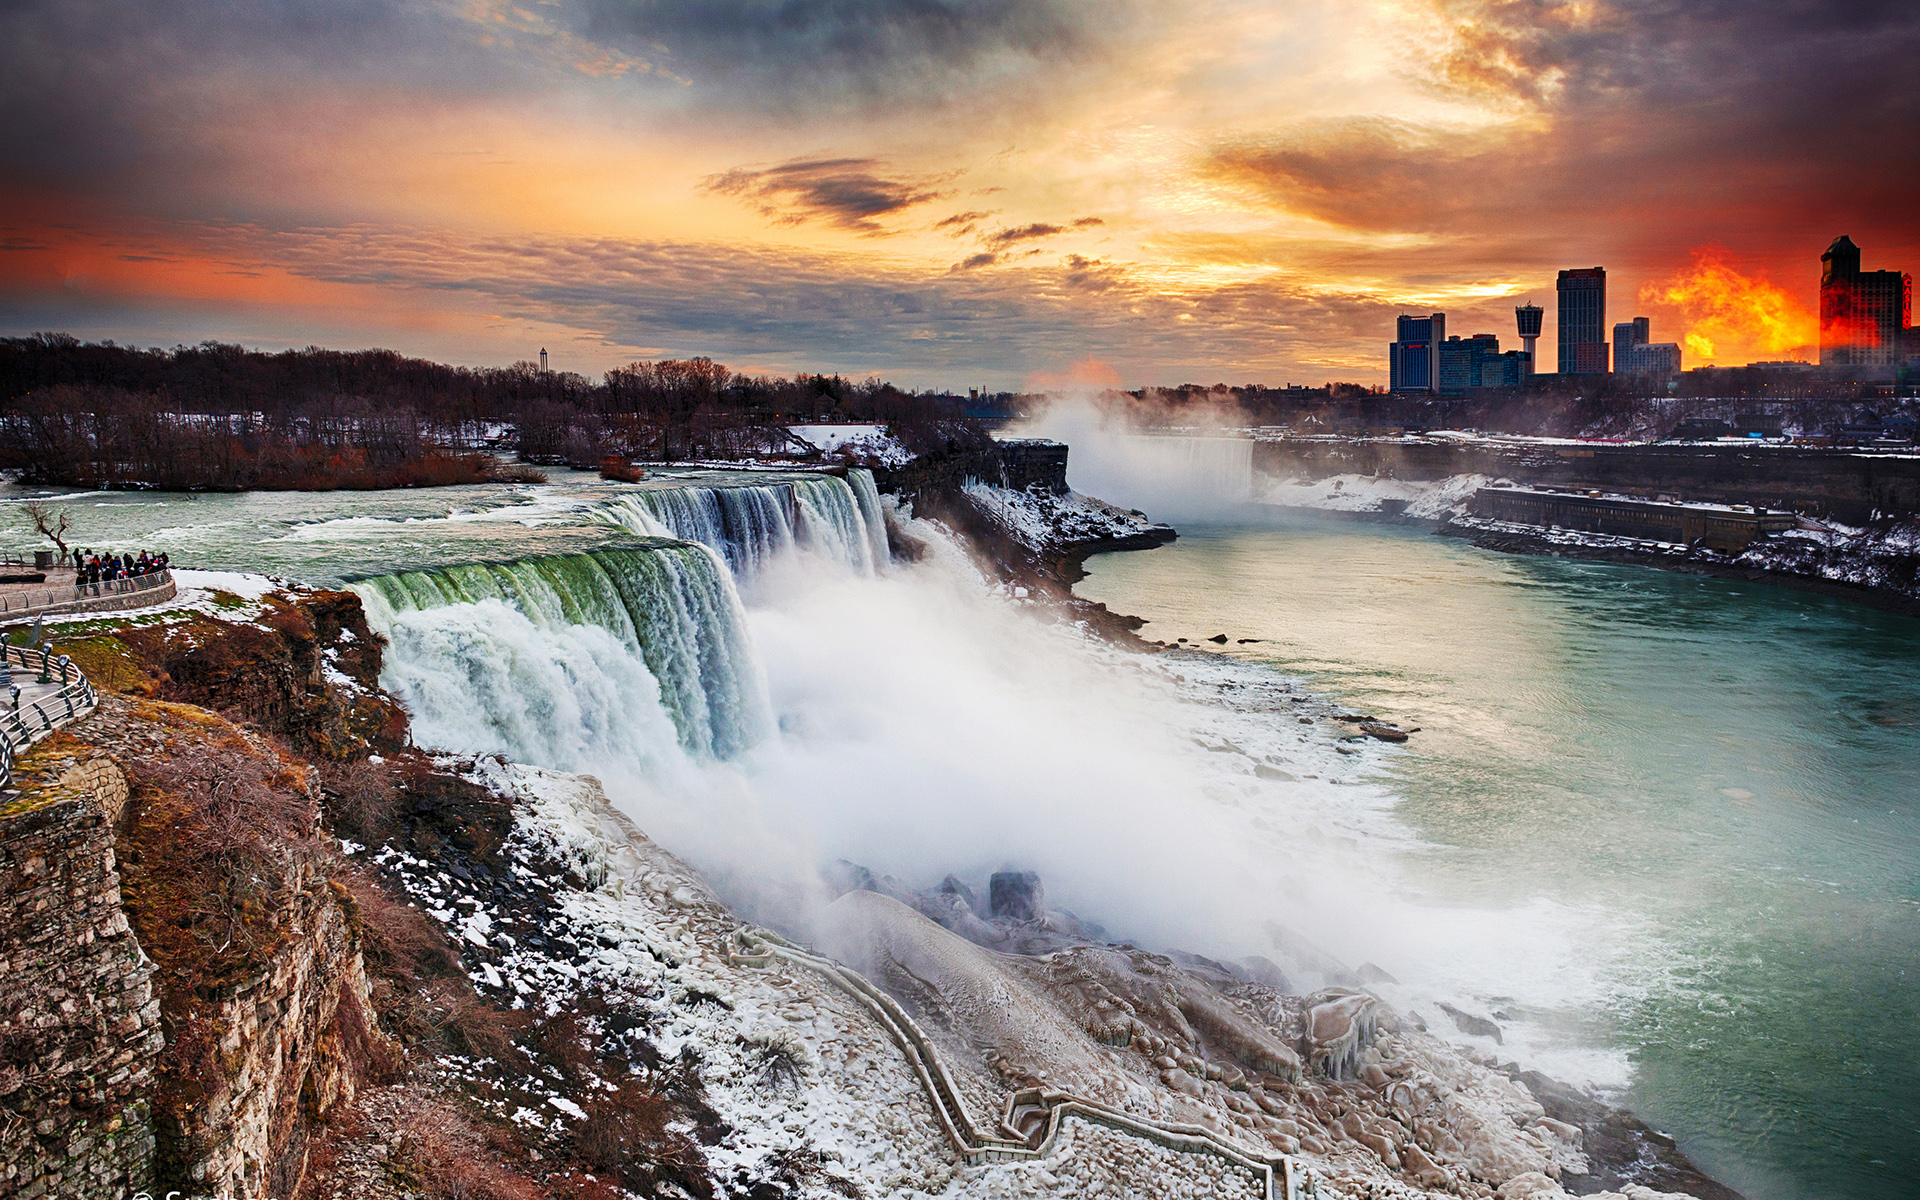 Ниагарский водопад (Niagara Falls) — Канада / США